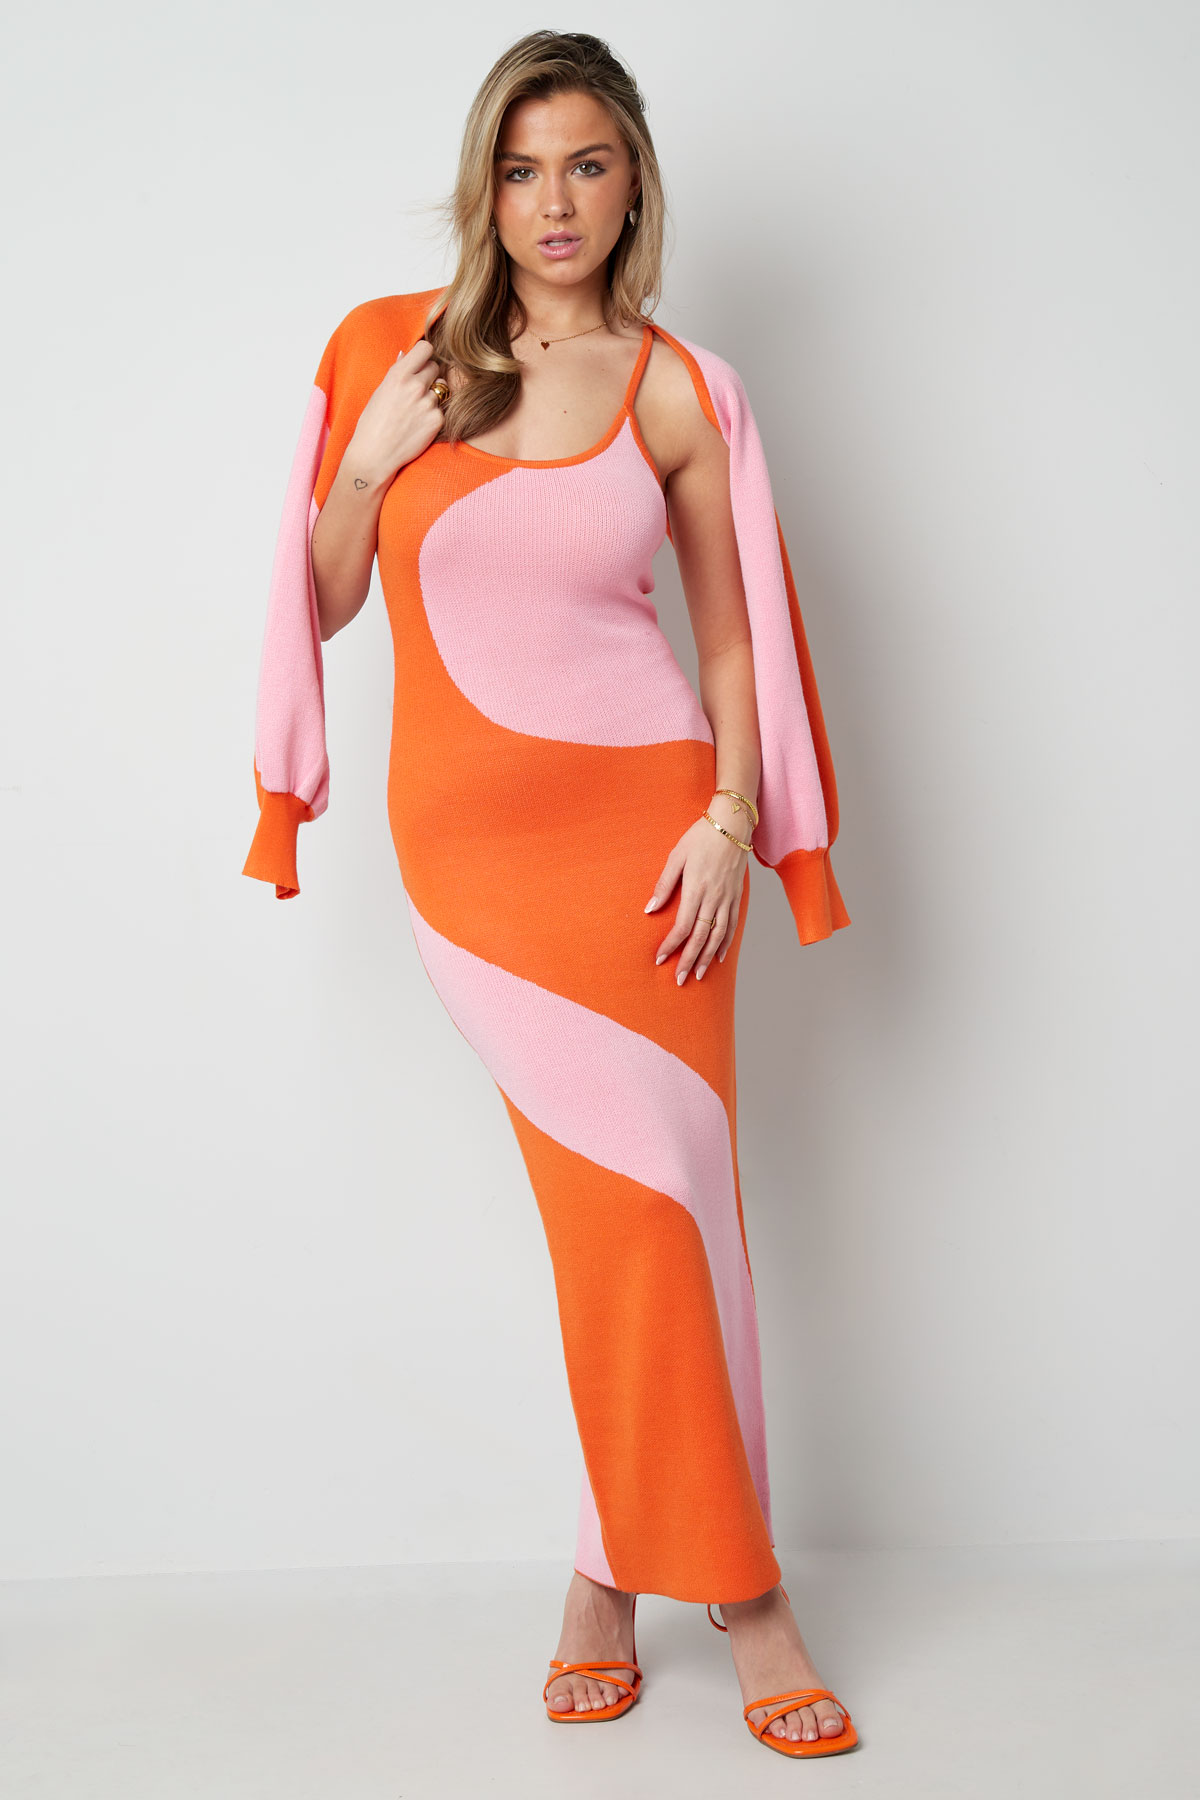 Vestido estampado orgánico - rosa naranja h5 Imagen6